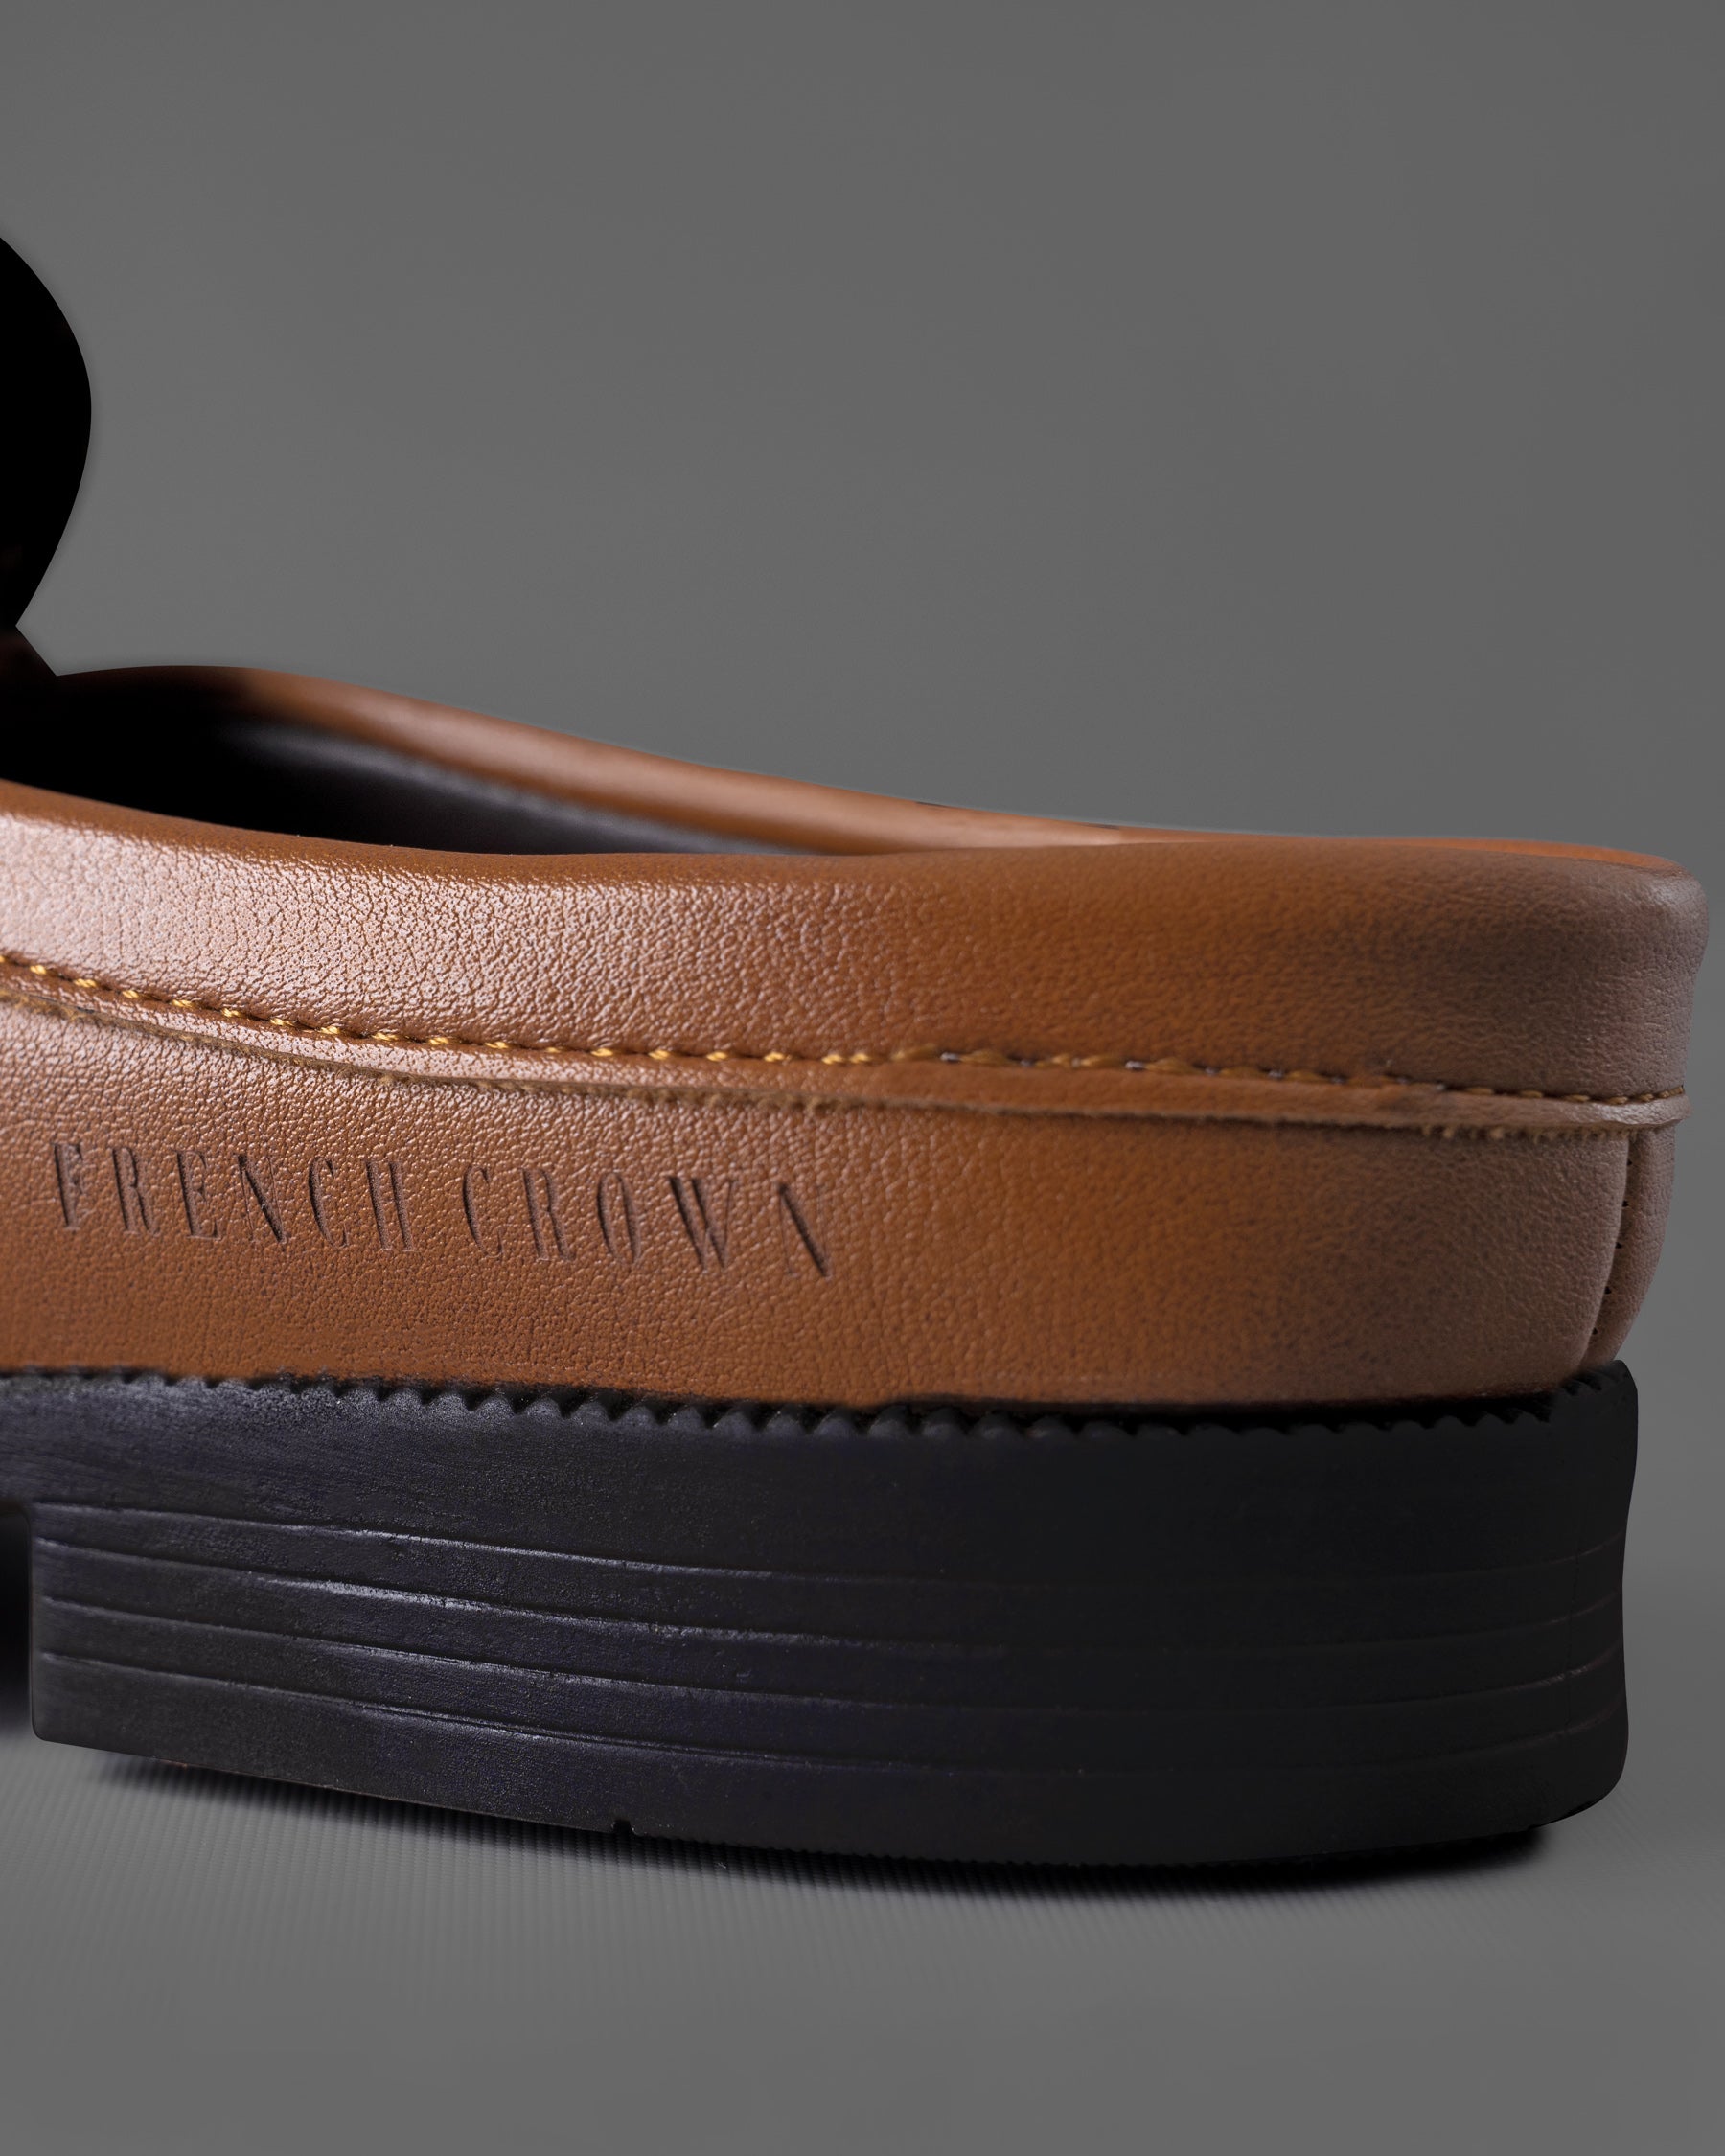 Tan Buckled Slip-on Shoes FT033-6, FT033-7, FT033-8, FT033-9, FT033-10